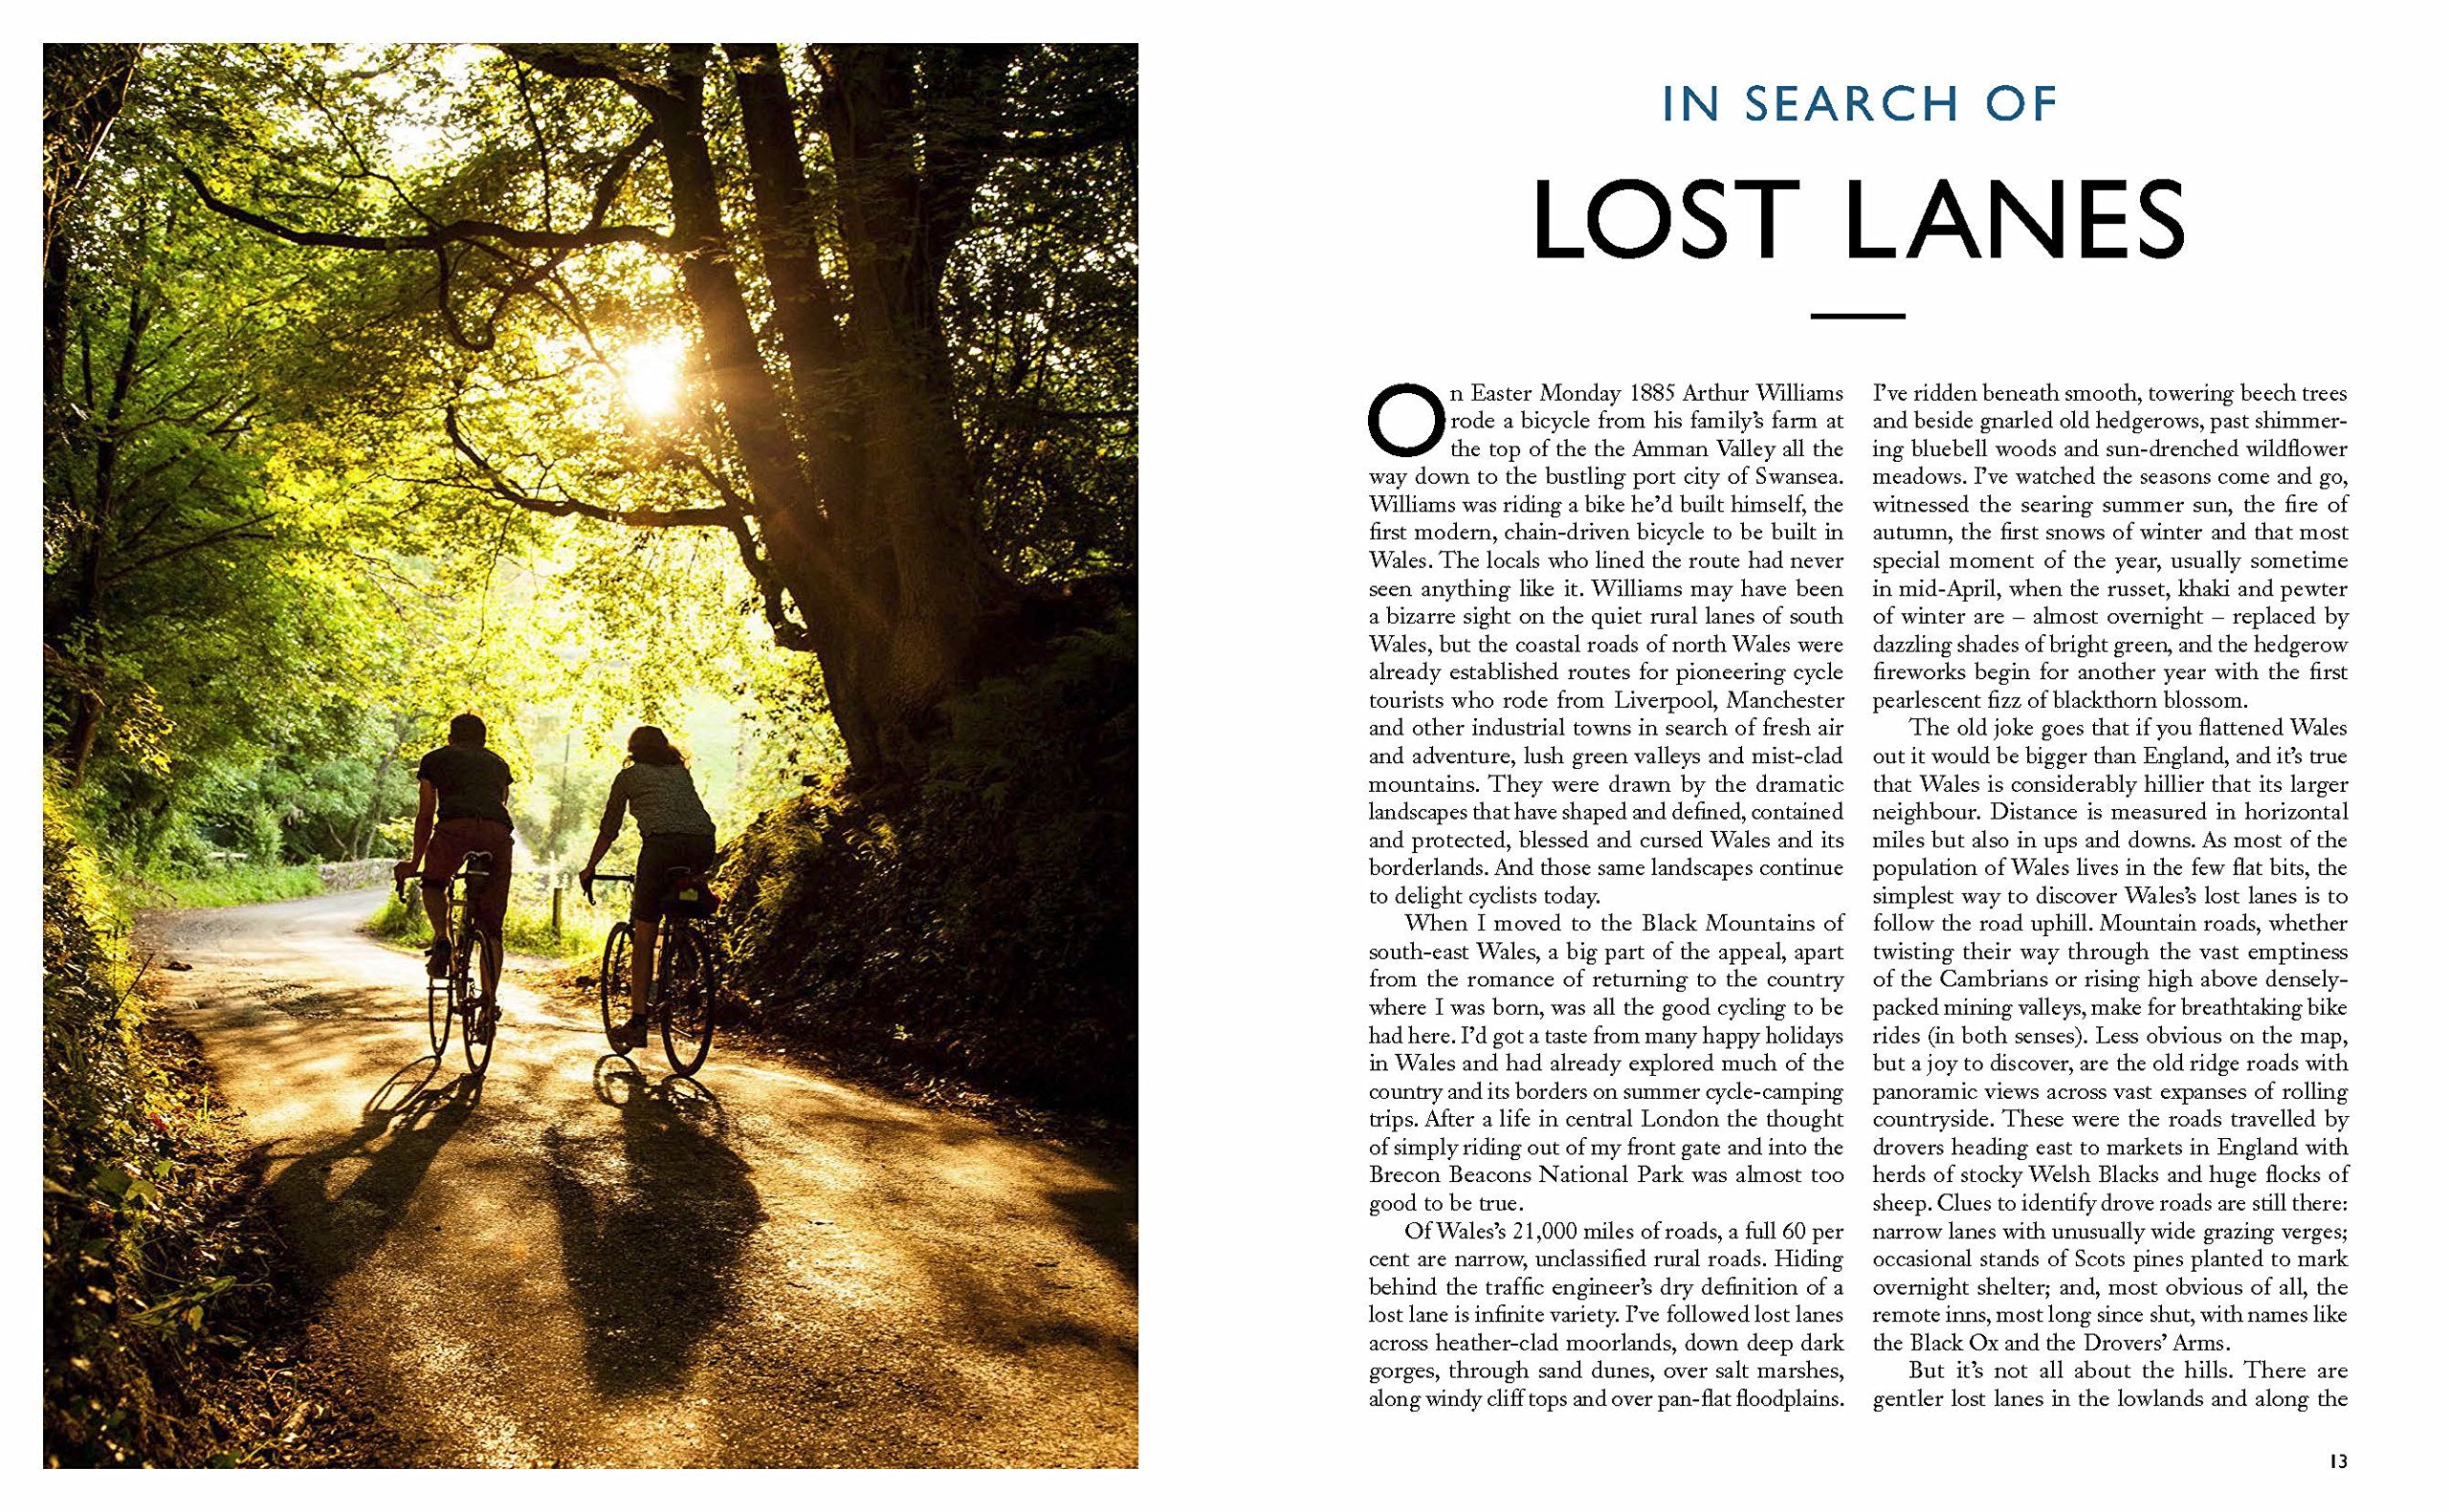 Lost Lanes, Wales. Jack Thurston